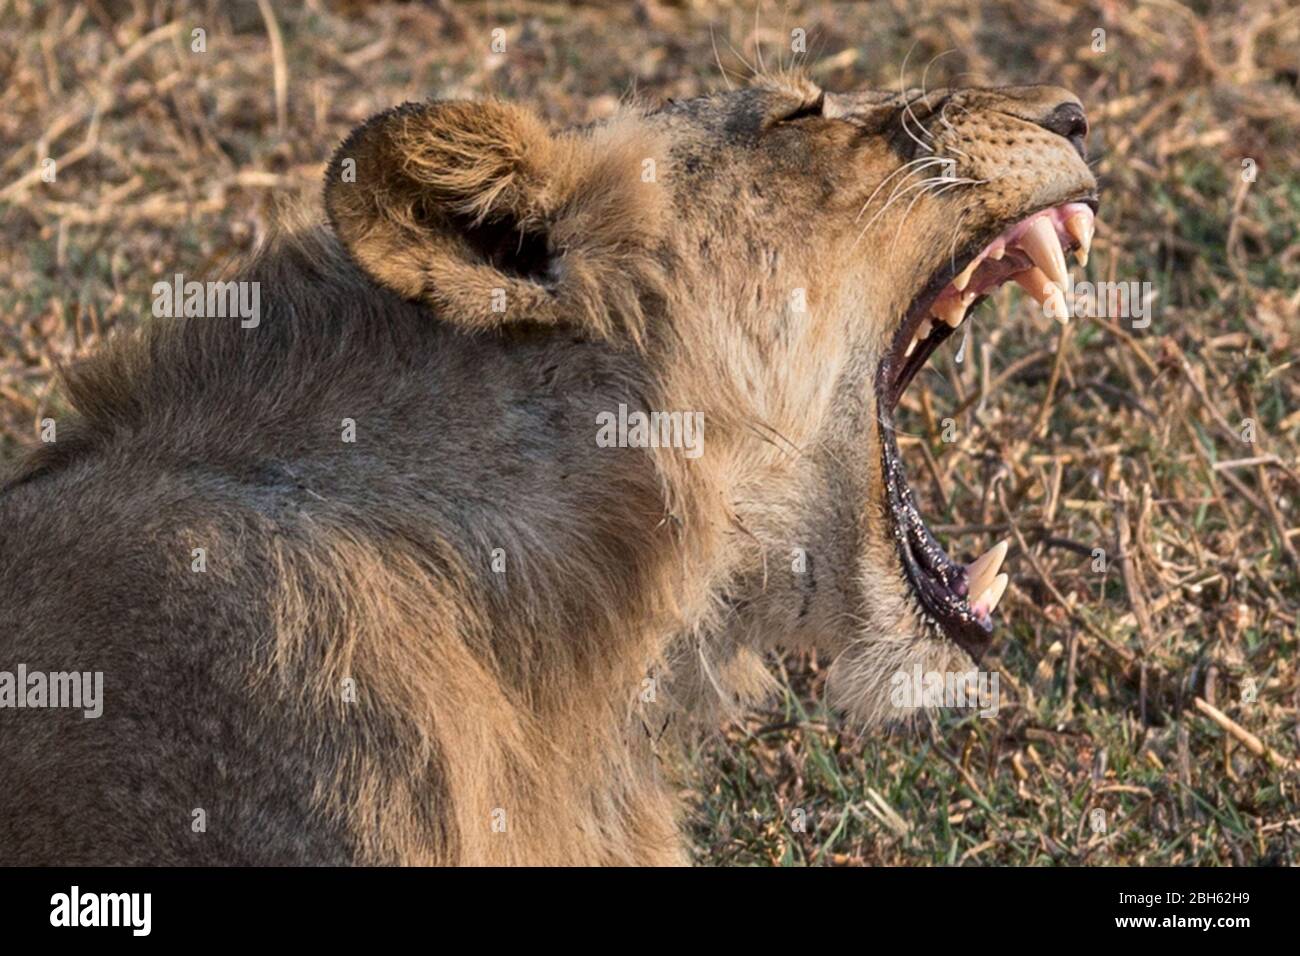 Junger Löwe gähnt, Dämmerung, Kafue River, Kafue National Park, Sambia, Afrika Stockfoto